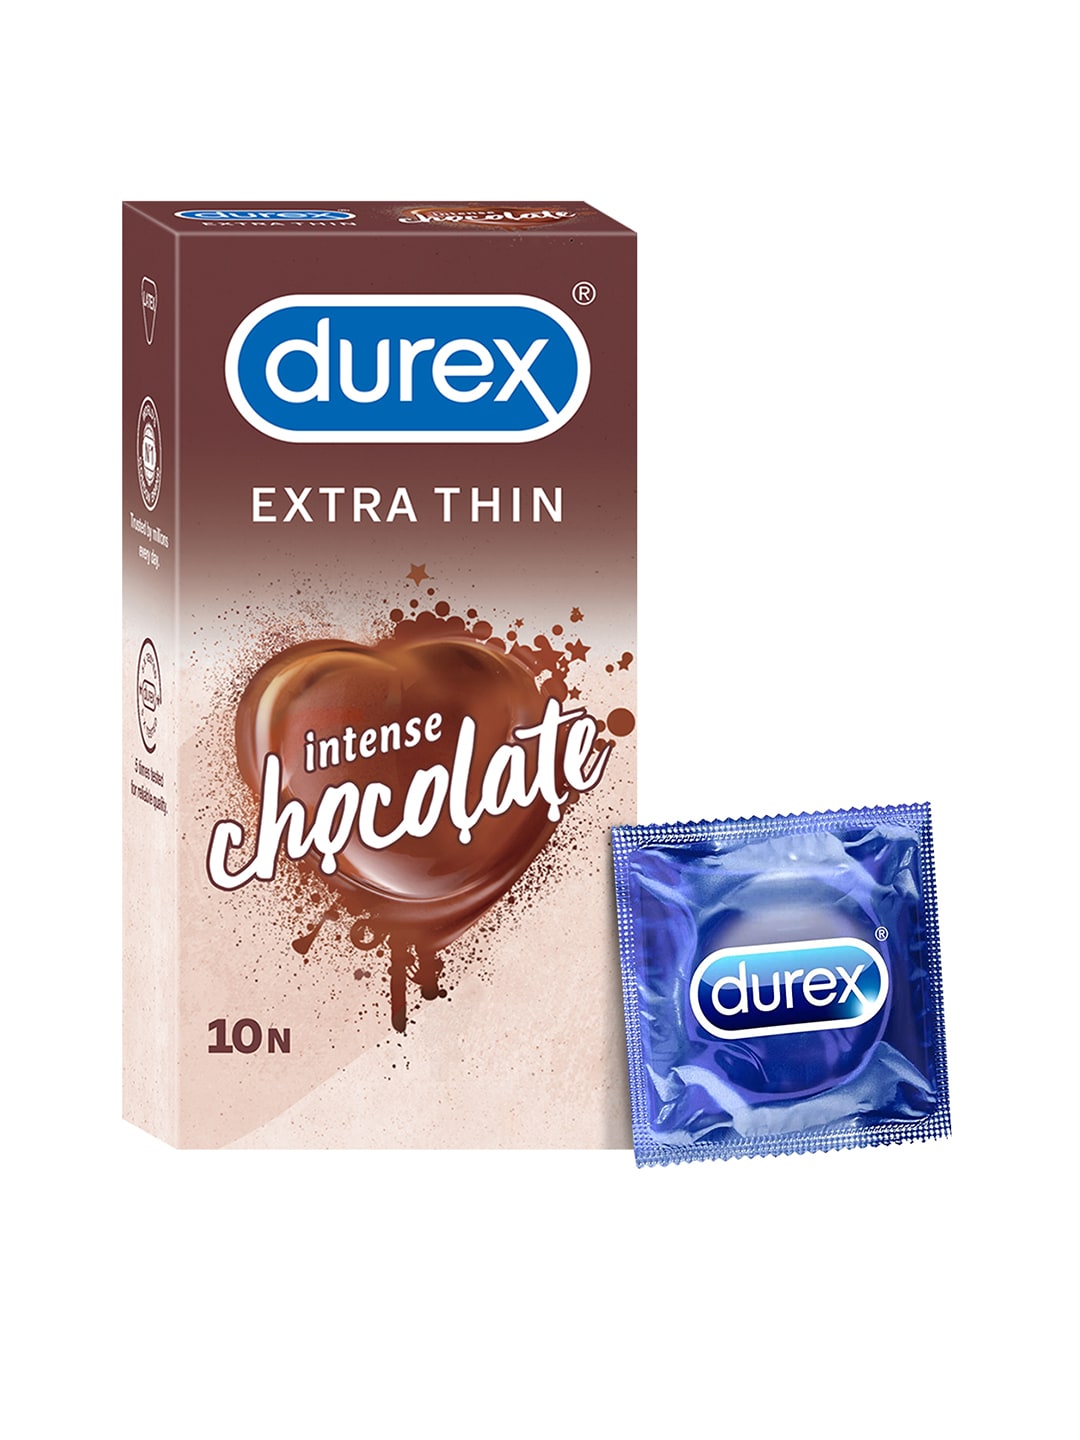 Durex Men Extra Thin Intense Chocolate Flavored Condoms - 10 Pieces